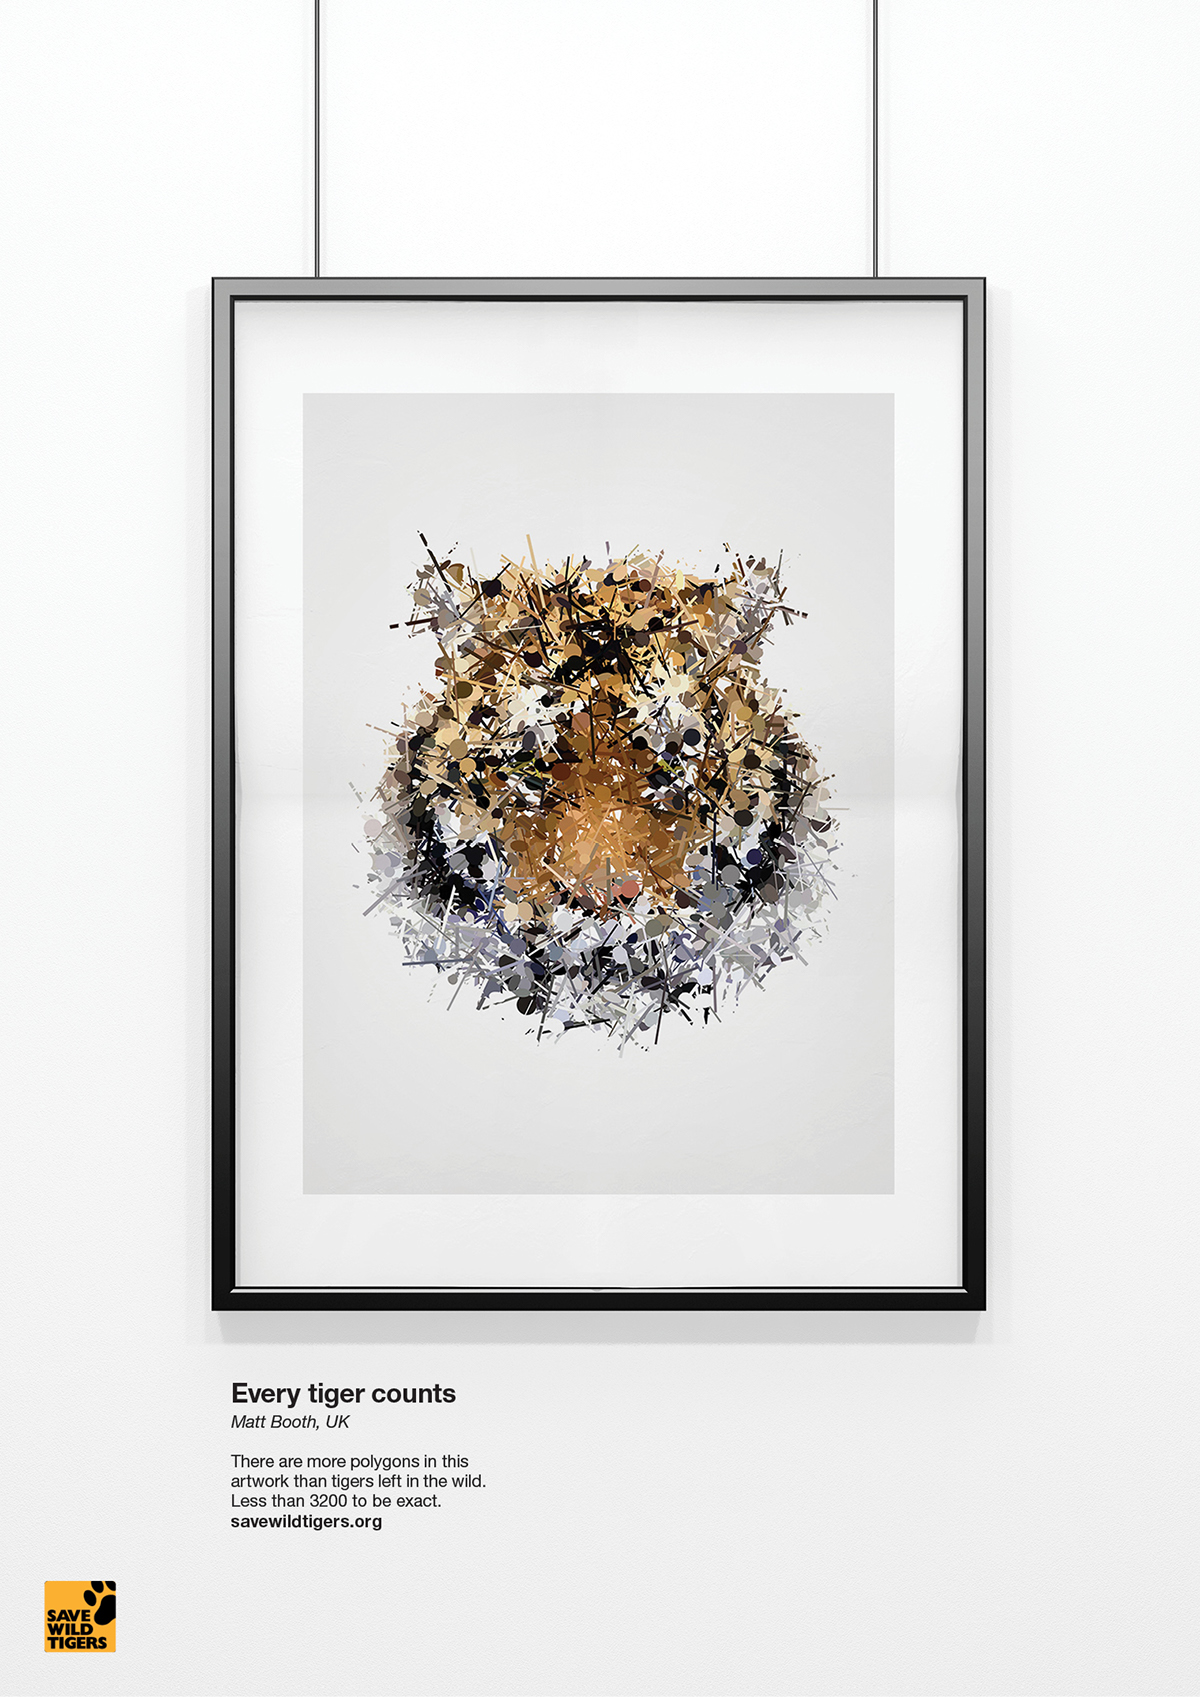 tiger Extinction dots Data fragments art sculpture digital awareness frame gallery environment animal preservation artwork